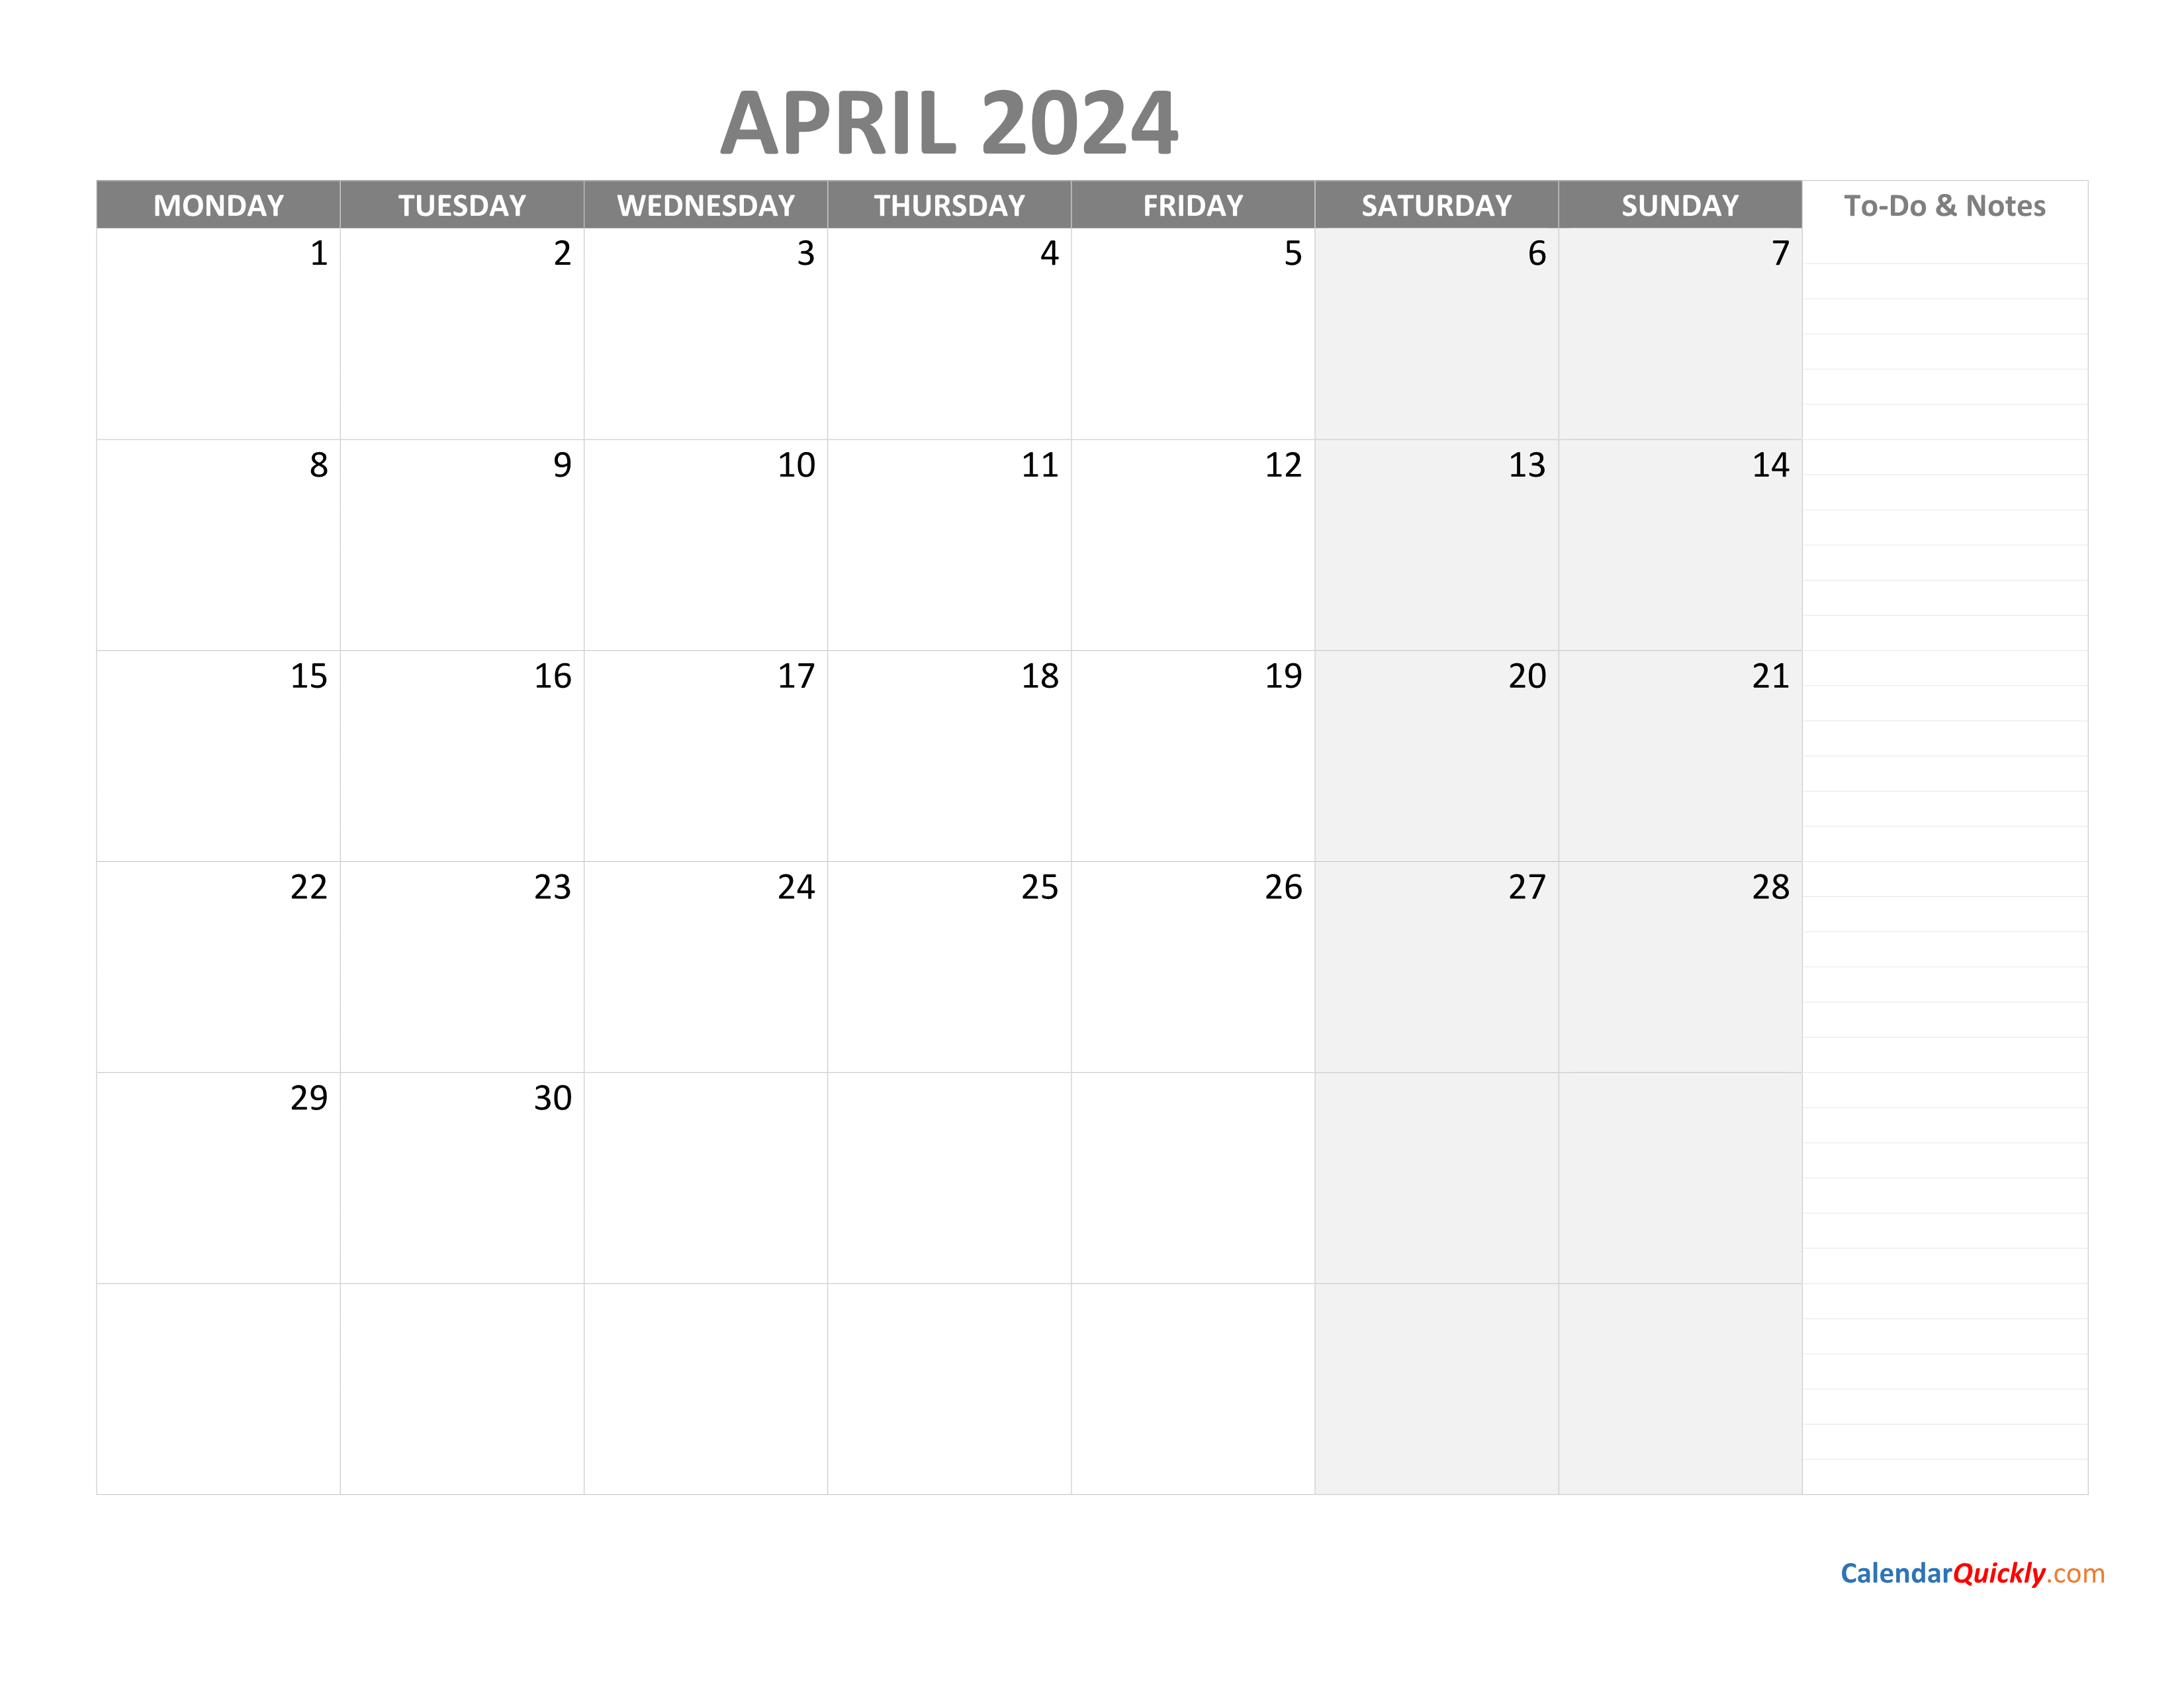 Солнечный календарь на апрель 2024. Календарь 2024. Календарь 2024 для заметок. April 2024 календарь. Календарь February 2024.